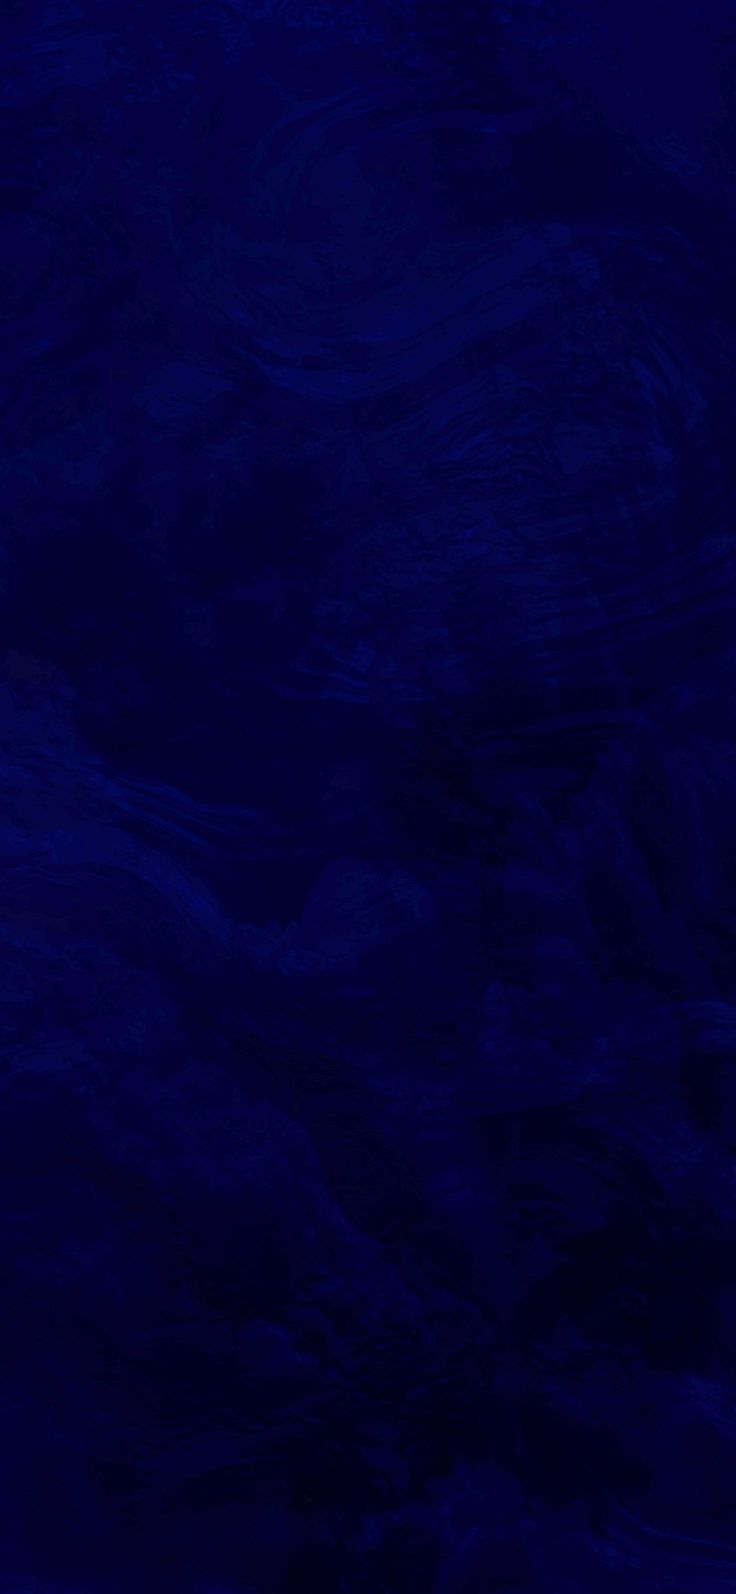 Dark Blue Aesthetic iPhone Wallpapers Top 25 Best Dark Blue Aesthetic  iPhone Wallpapers  Getty Wallpapers